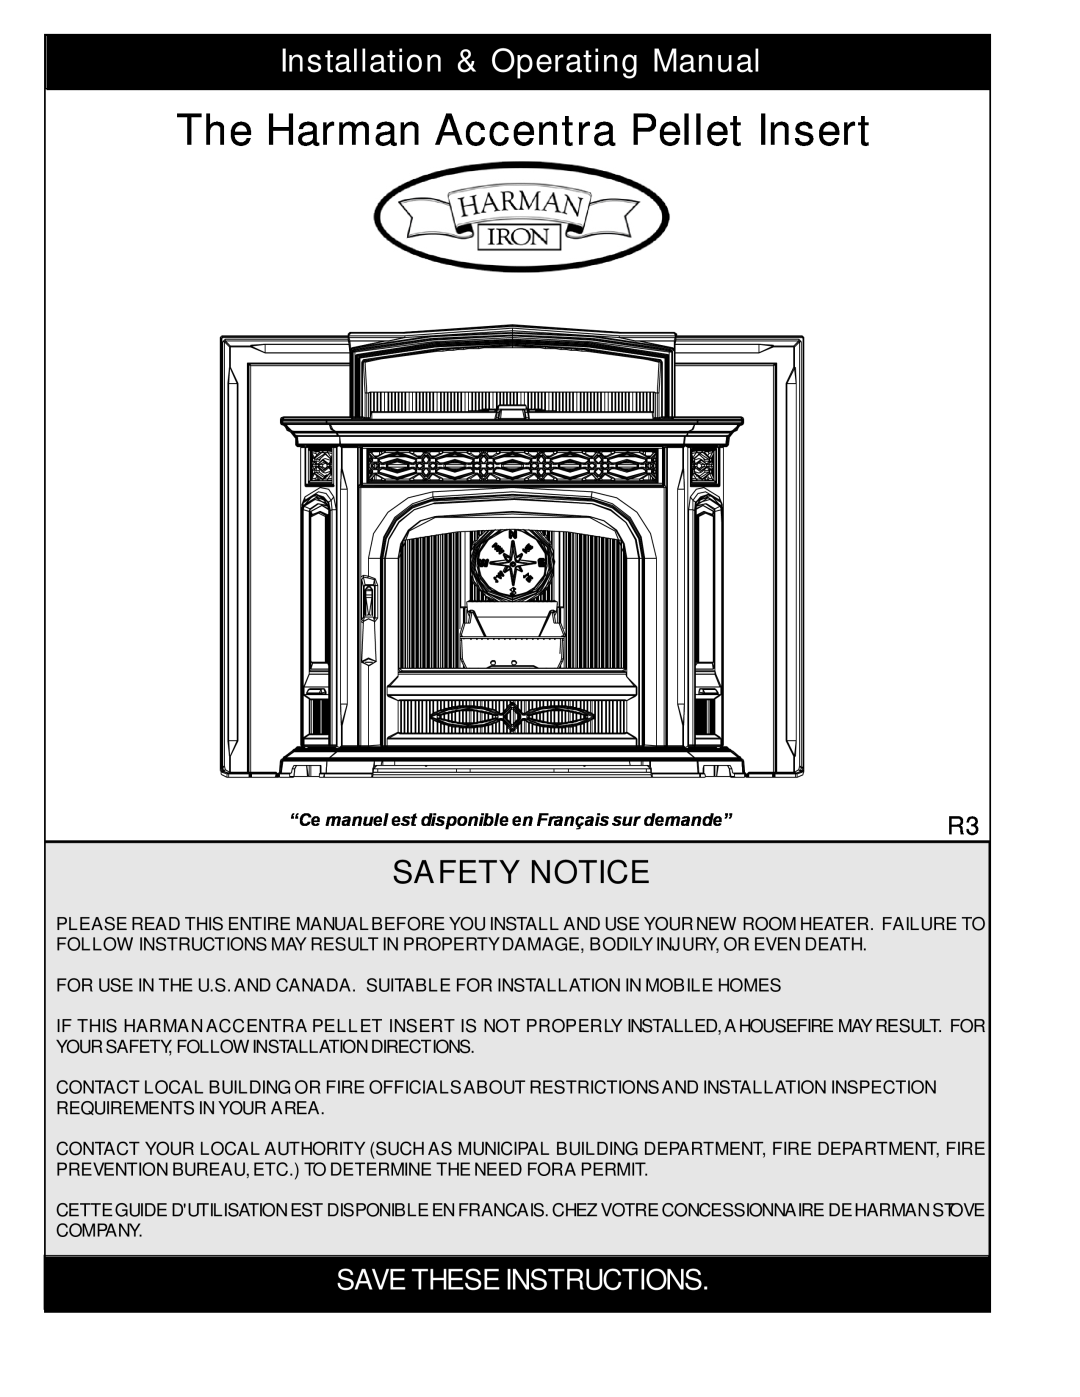 Harman Stove Company The Harman Accentra Pellet Insert manual Installation & Operating Manual, Safety Notice 